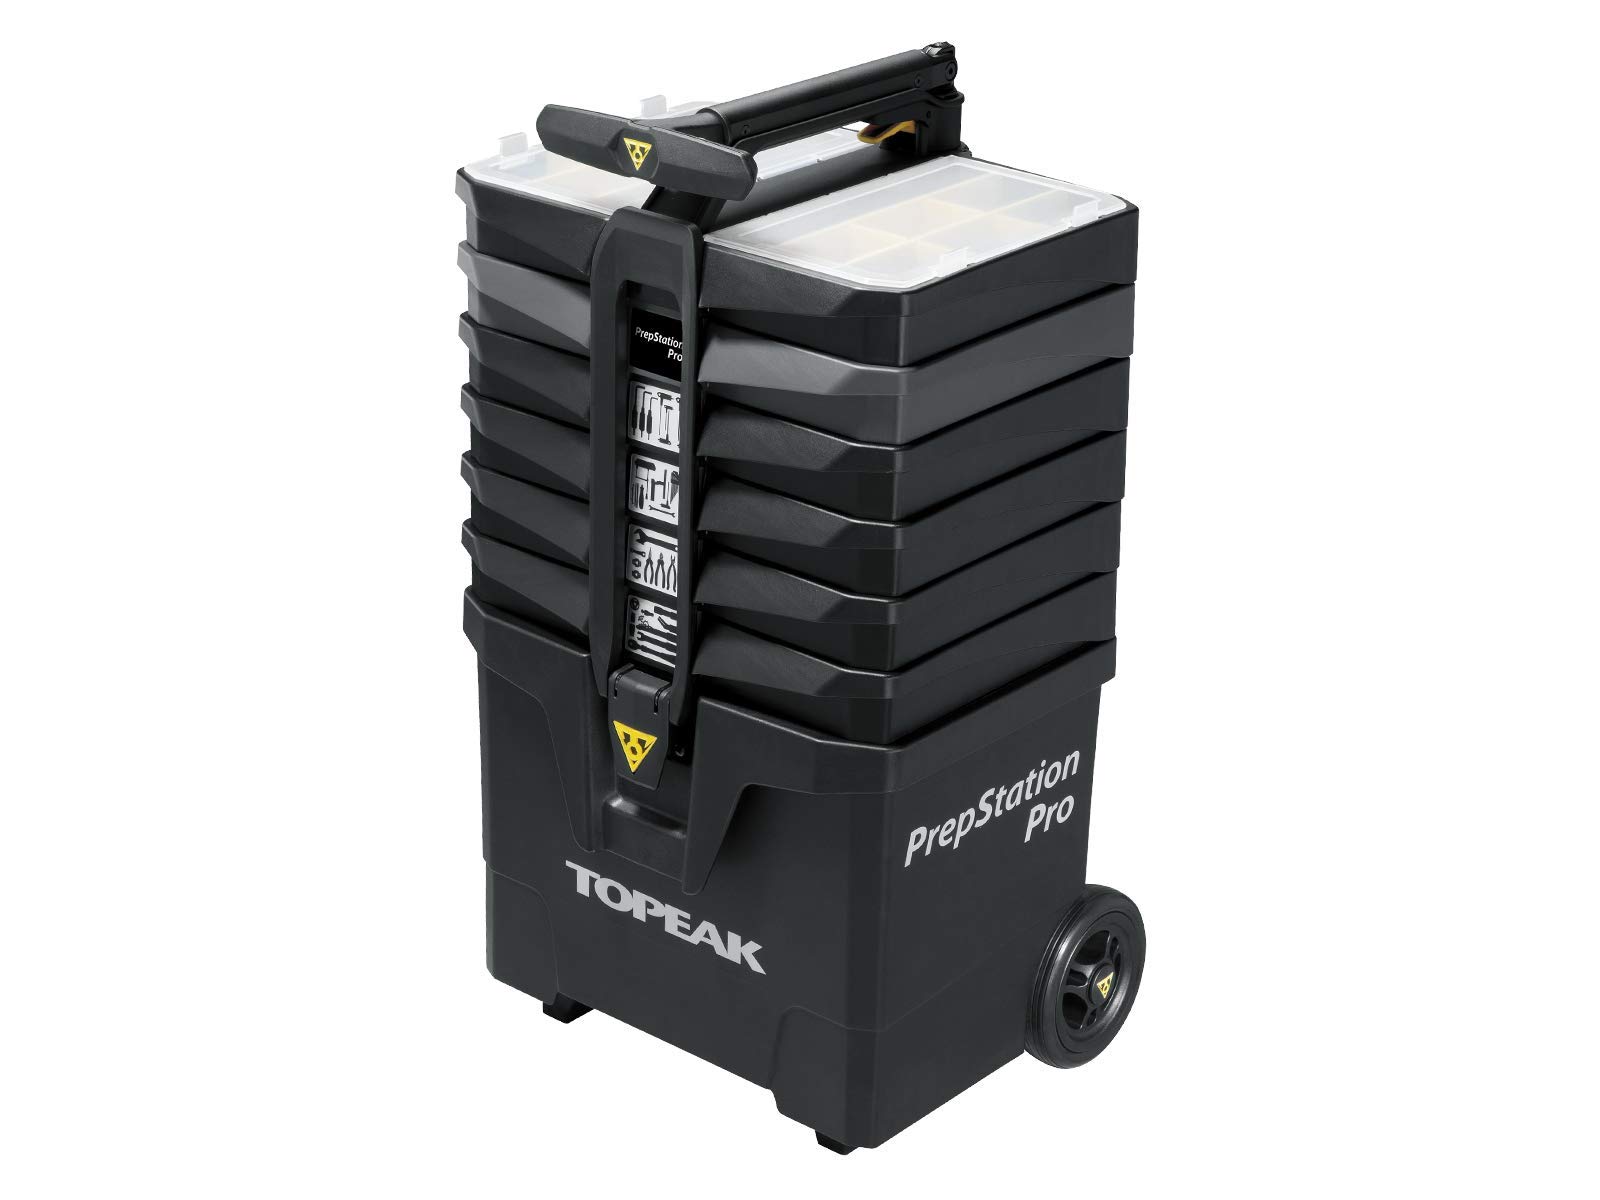 Topeak PrepStation Pro, Portable, 55 Professional Shop ...